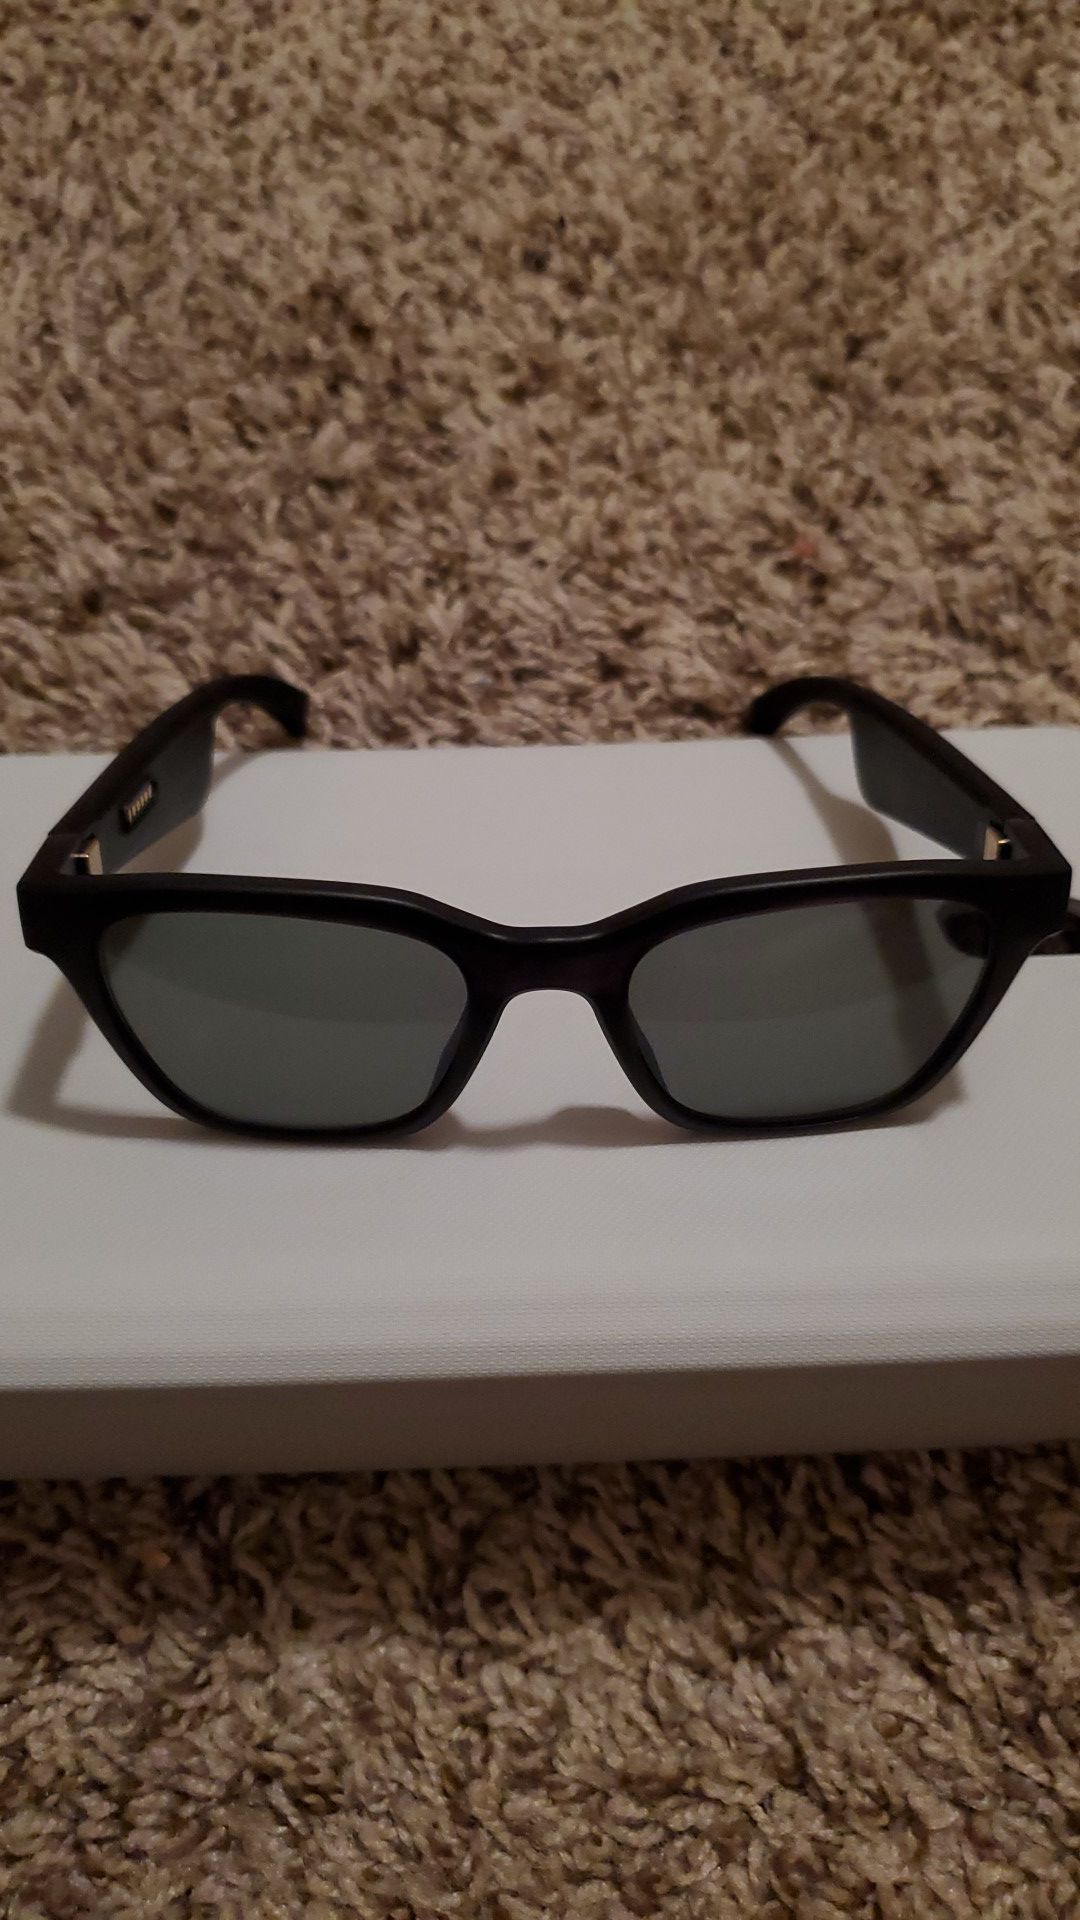 Bose smart Tenor glasses